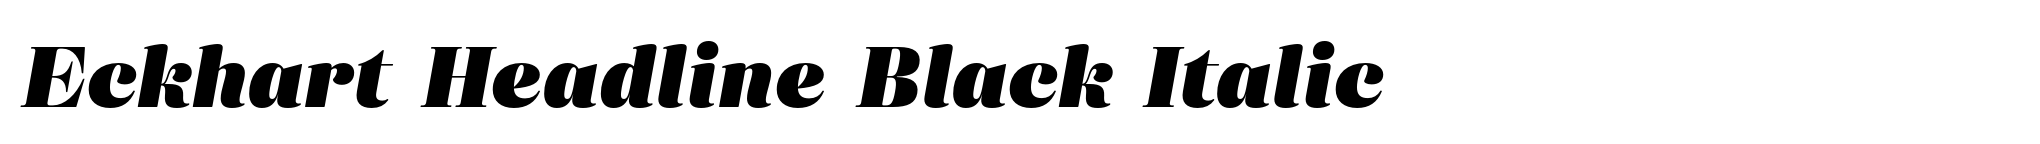 Eckhart Headline Black Italic image